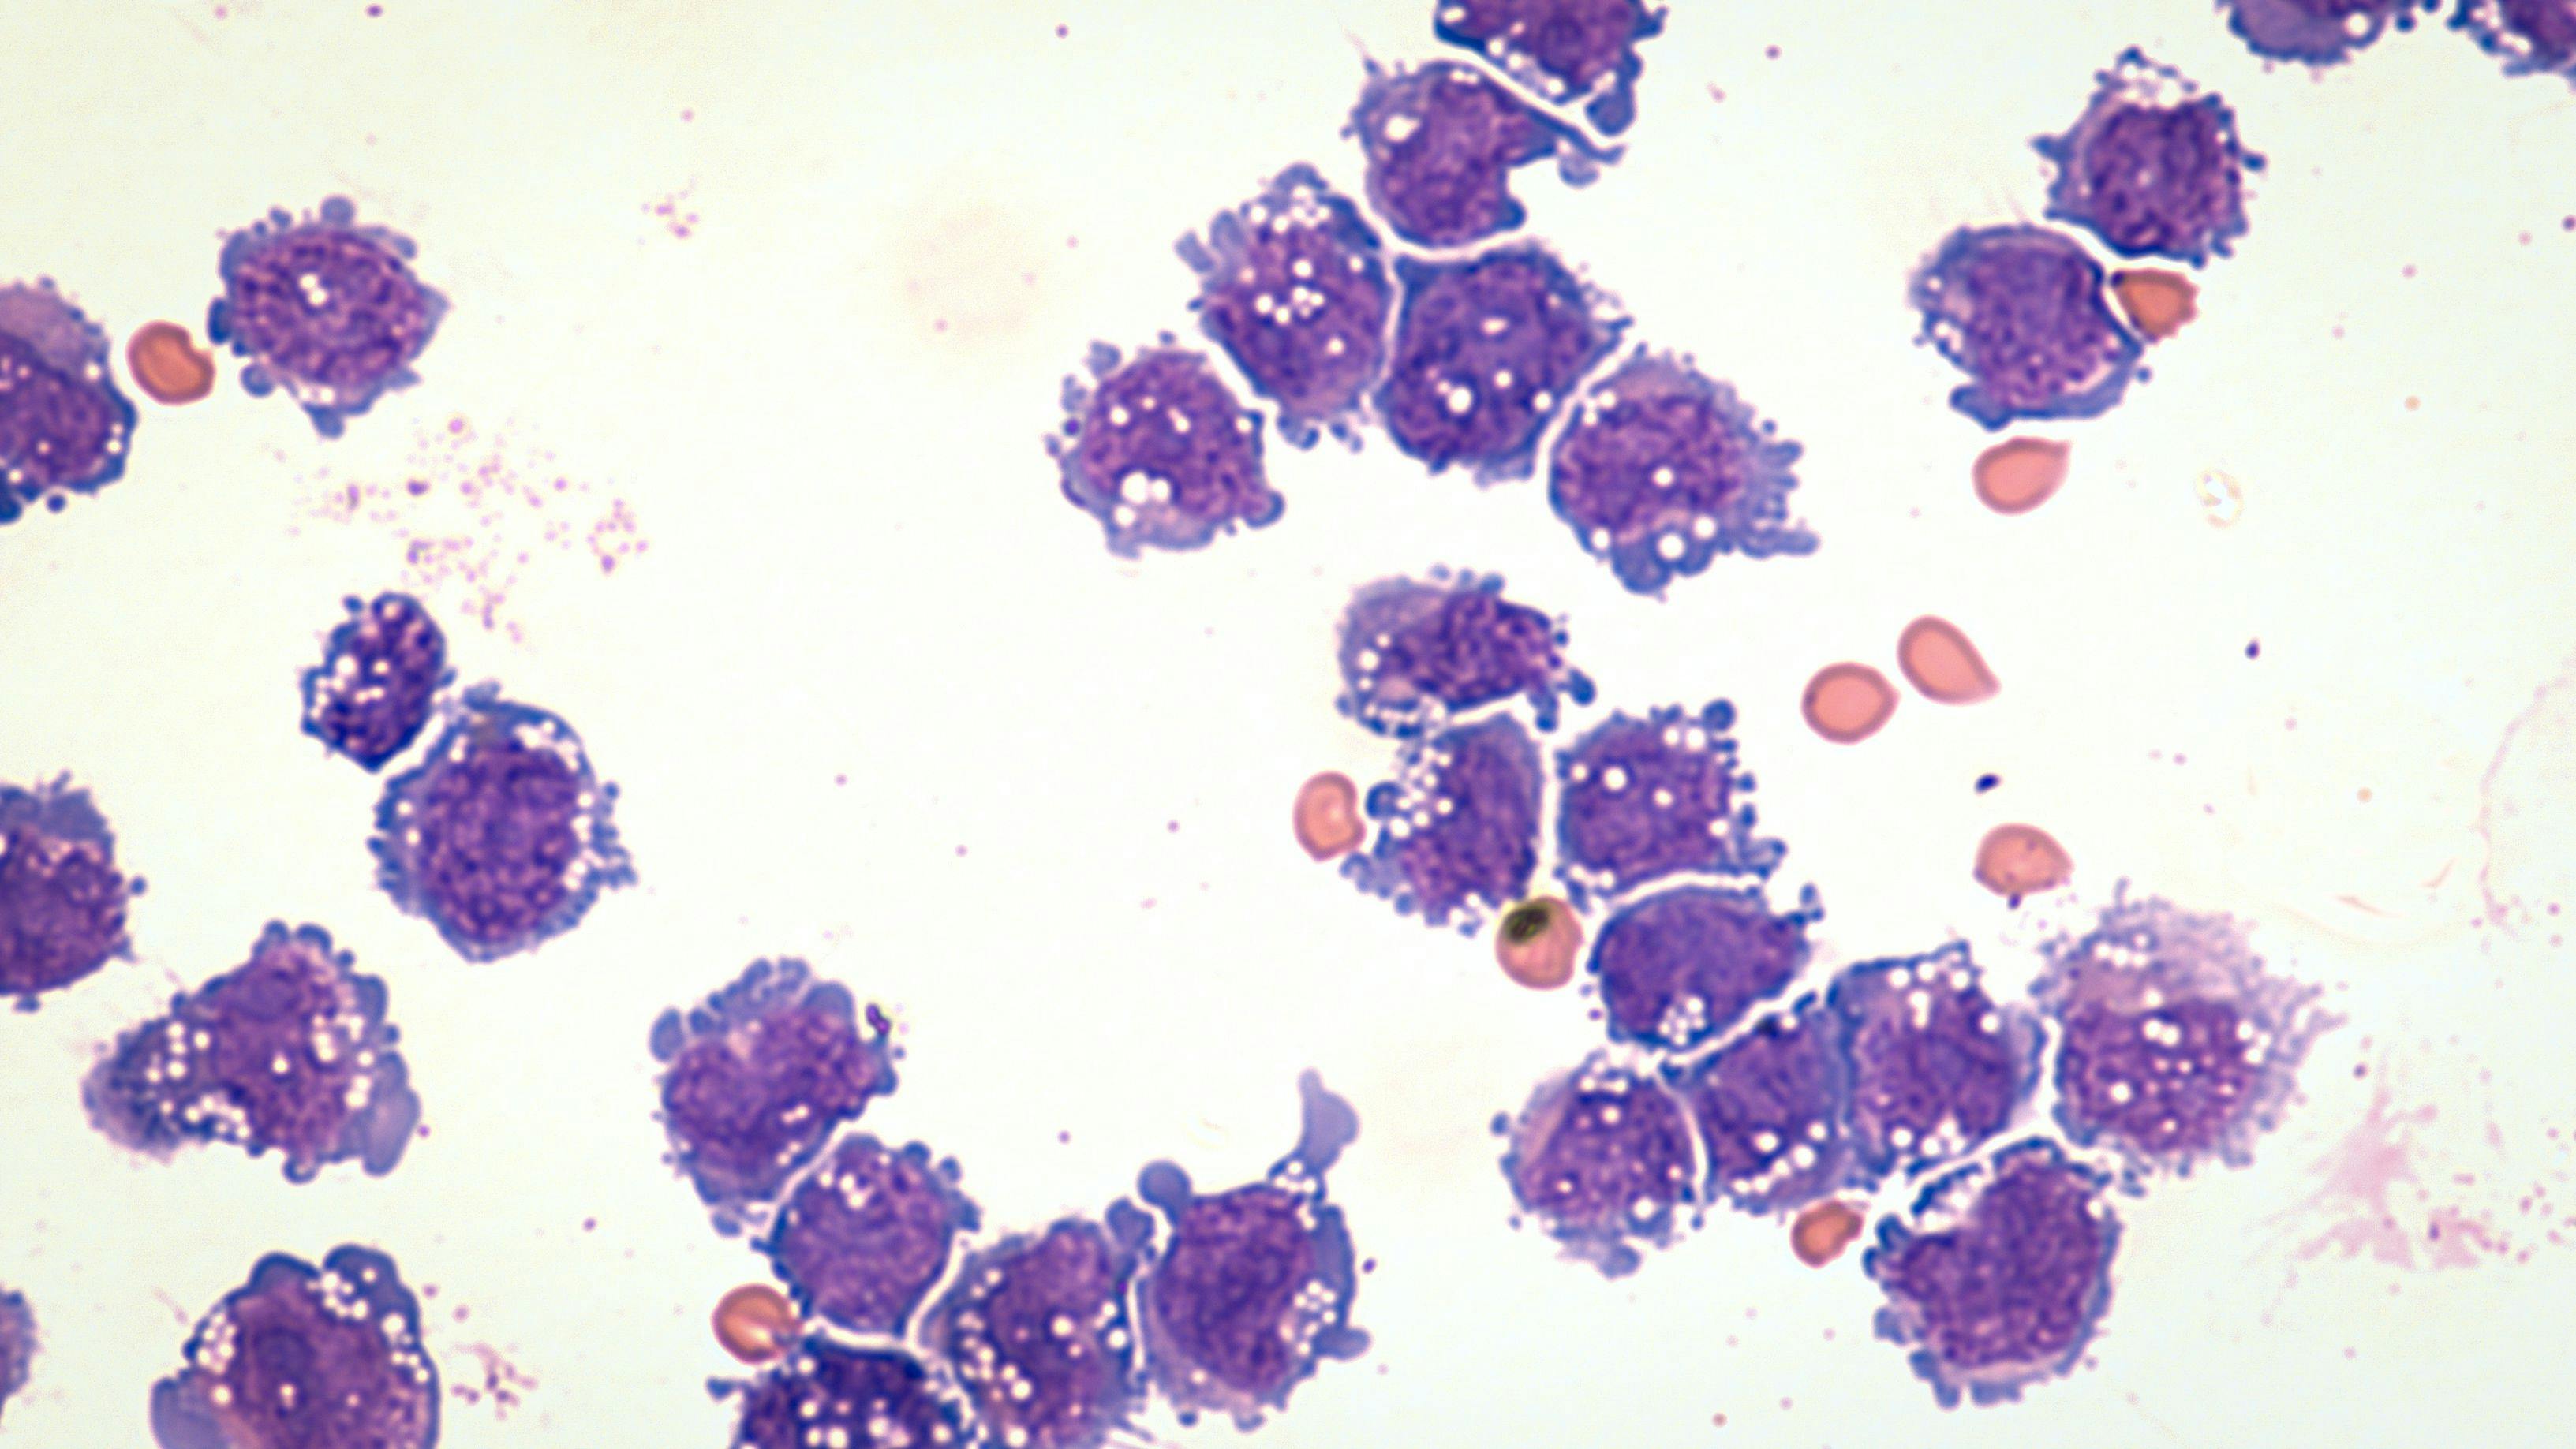 Microscopic image of diffuse large B-cell lymphoma | Image credit: David A Litman - stock.adobe.com